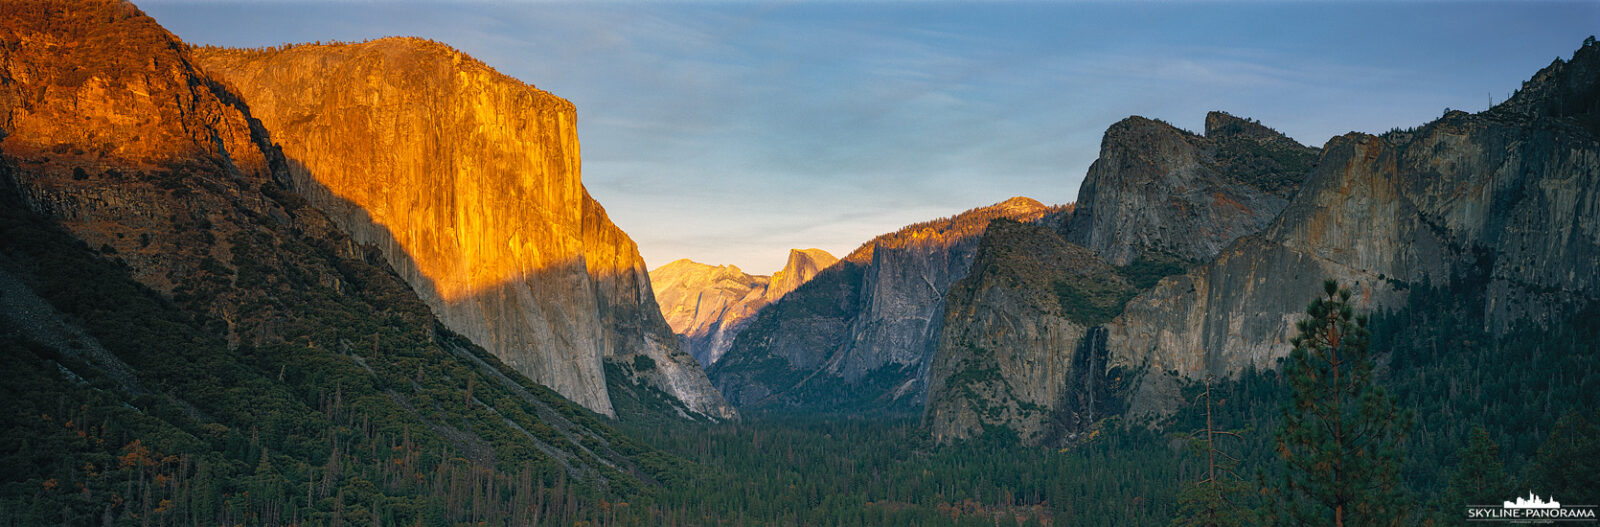 Yosemite National Park - California (p_01148)